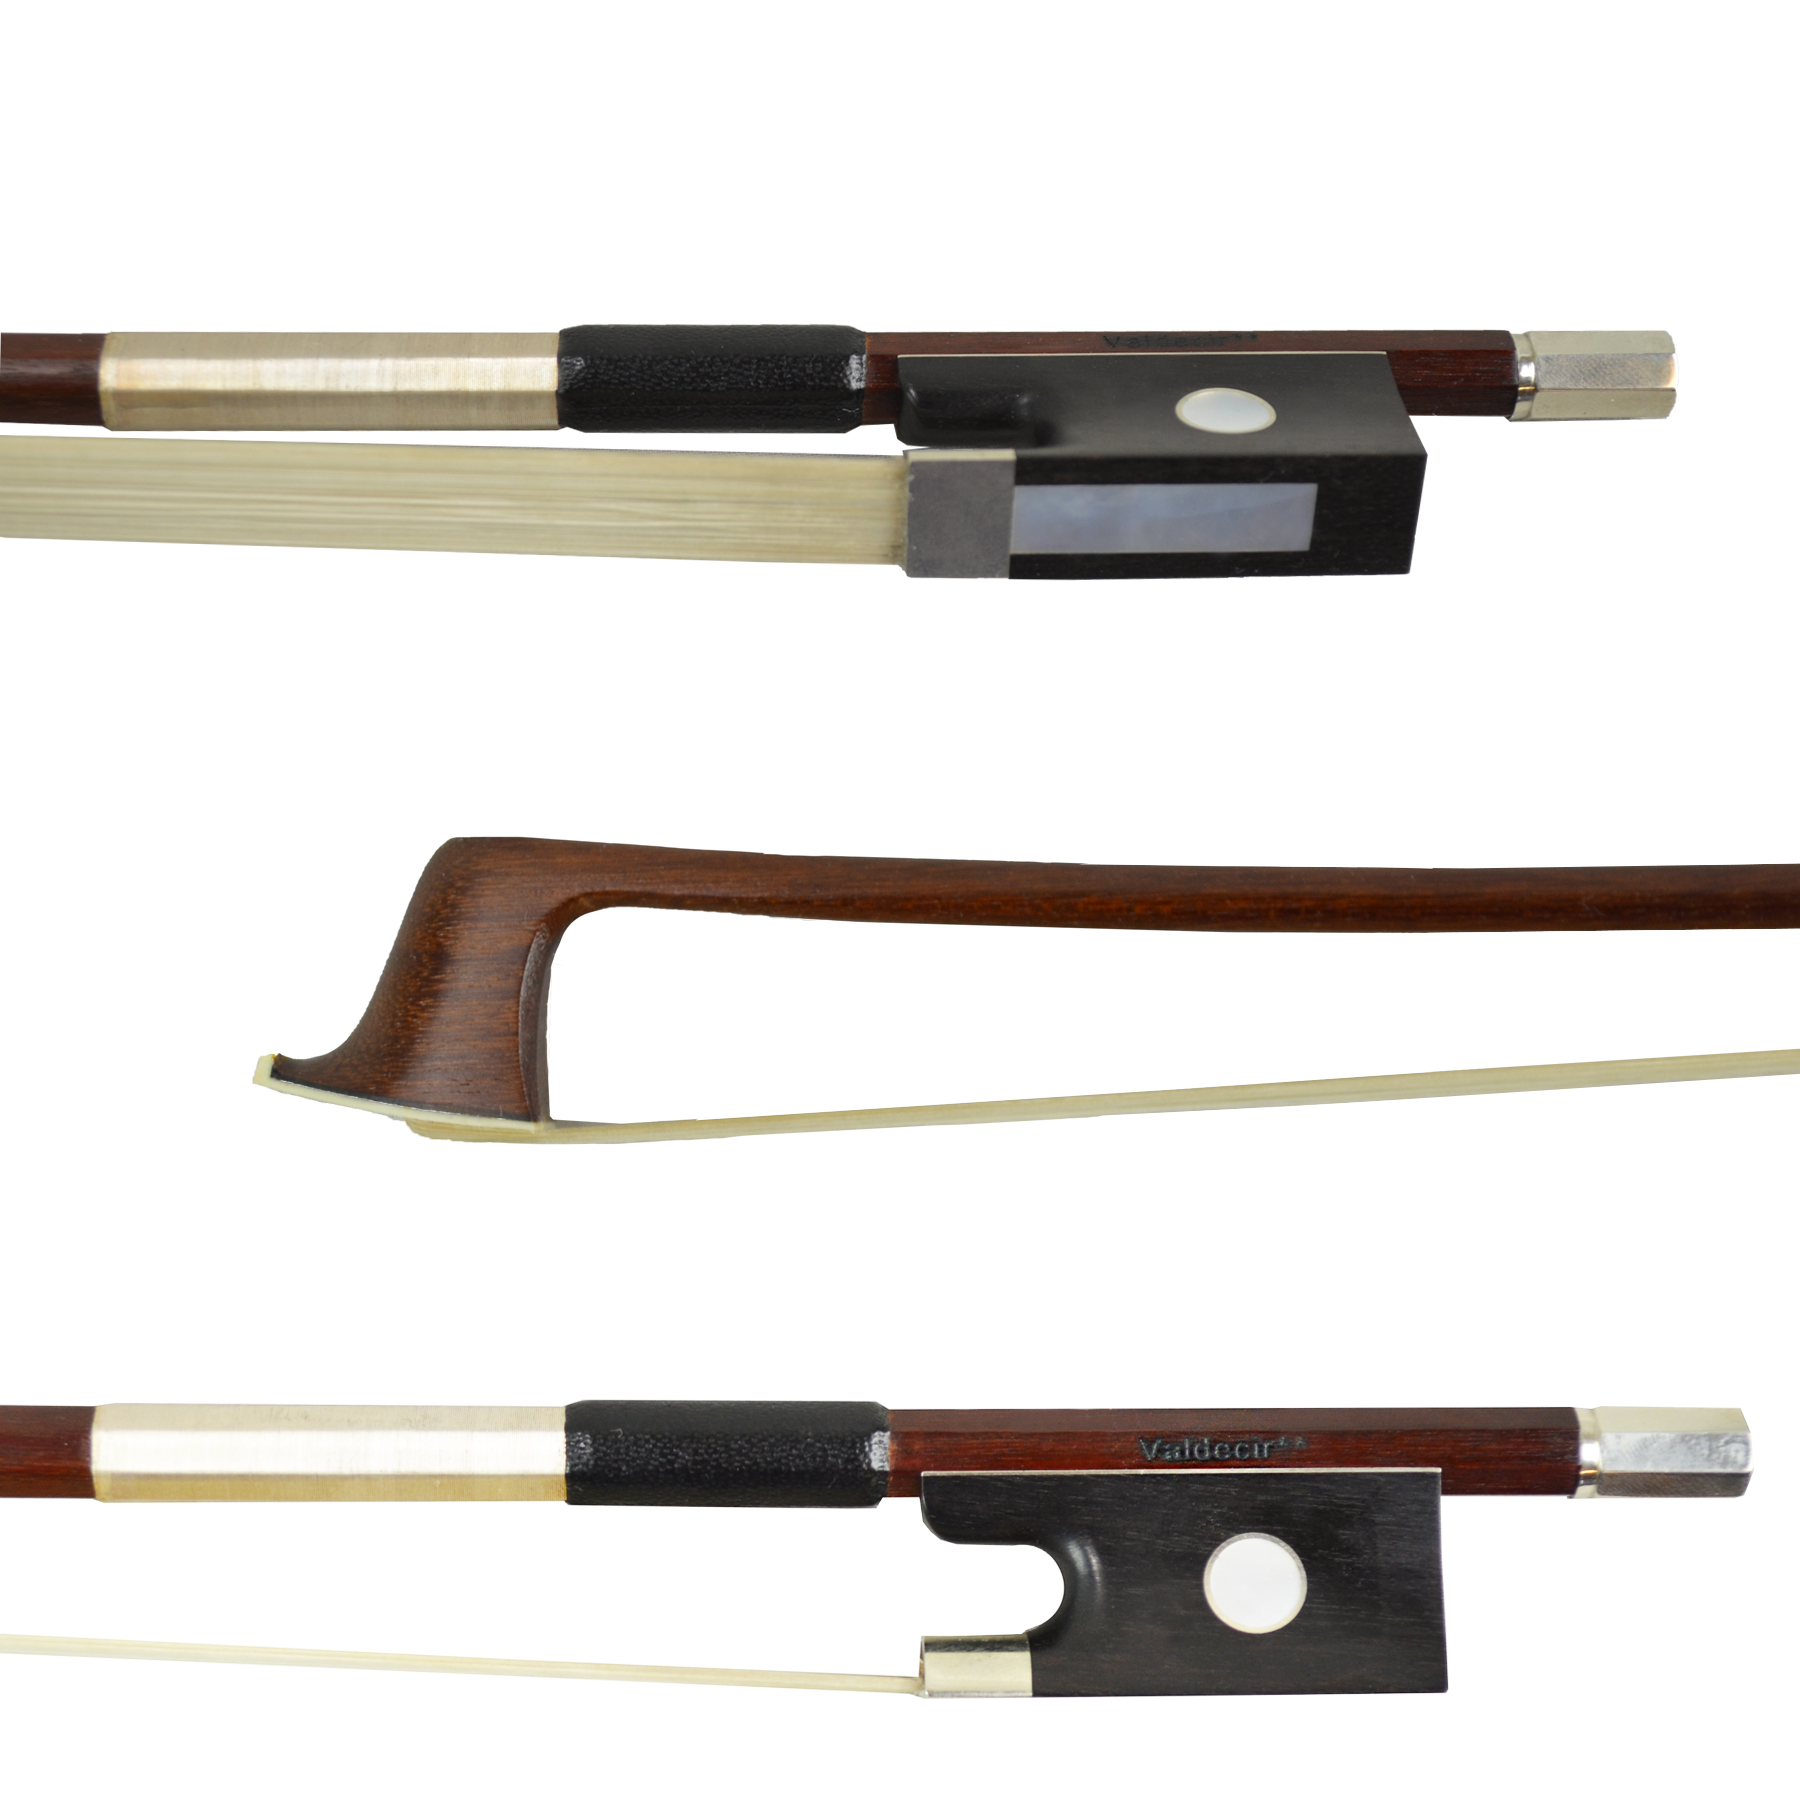 Sousa Bows Artisan 4/4 Violin Bow in action